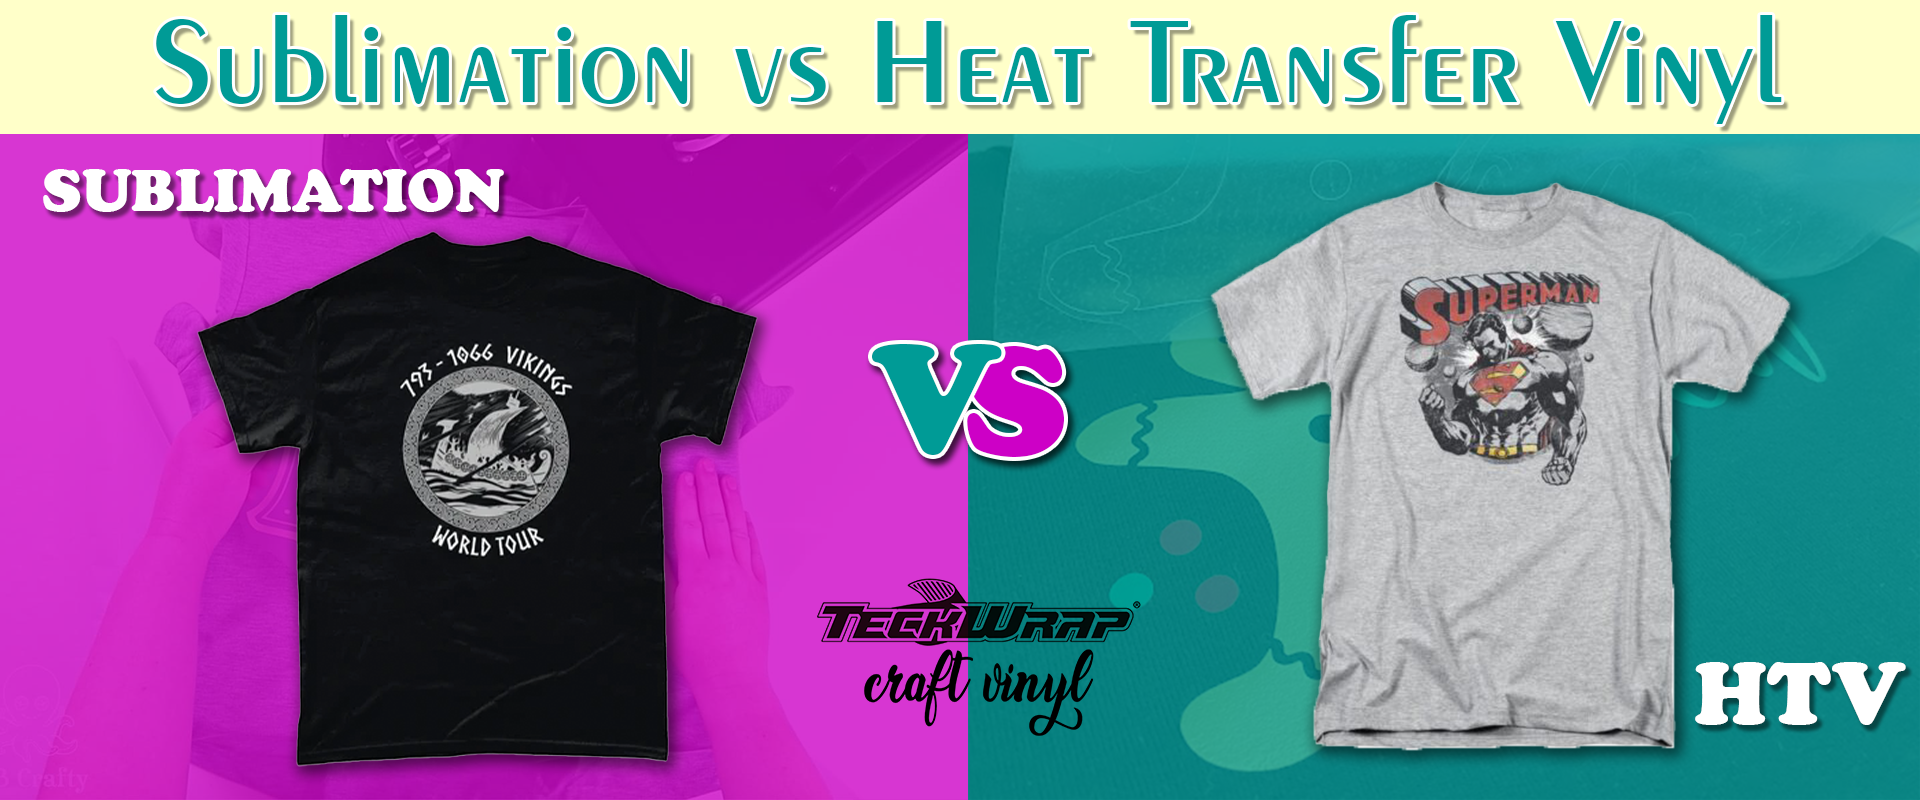 Sublimation vs Heat Transfer Vinyl– TeckwrapCraft